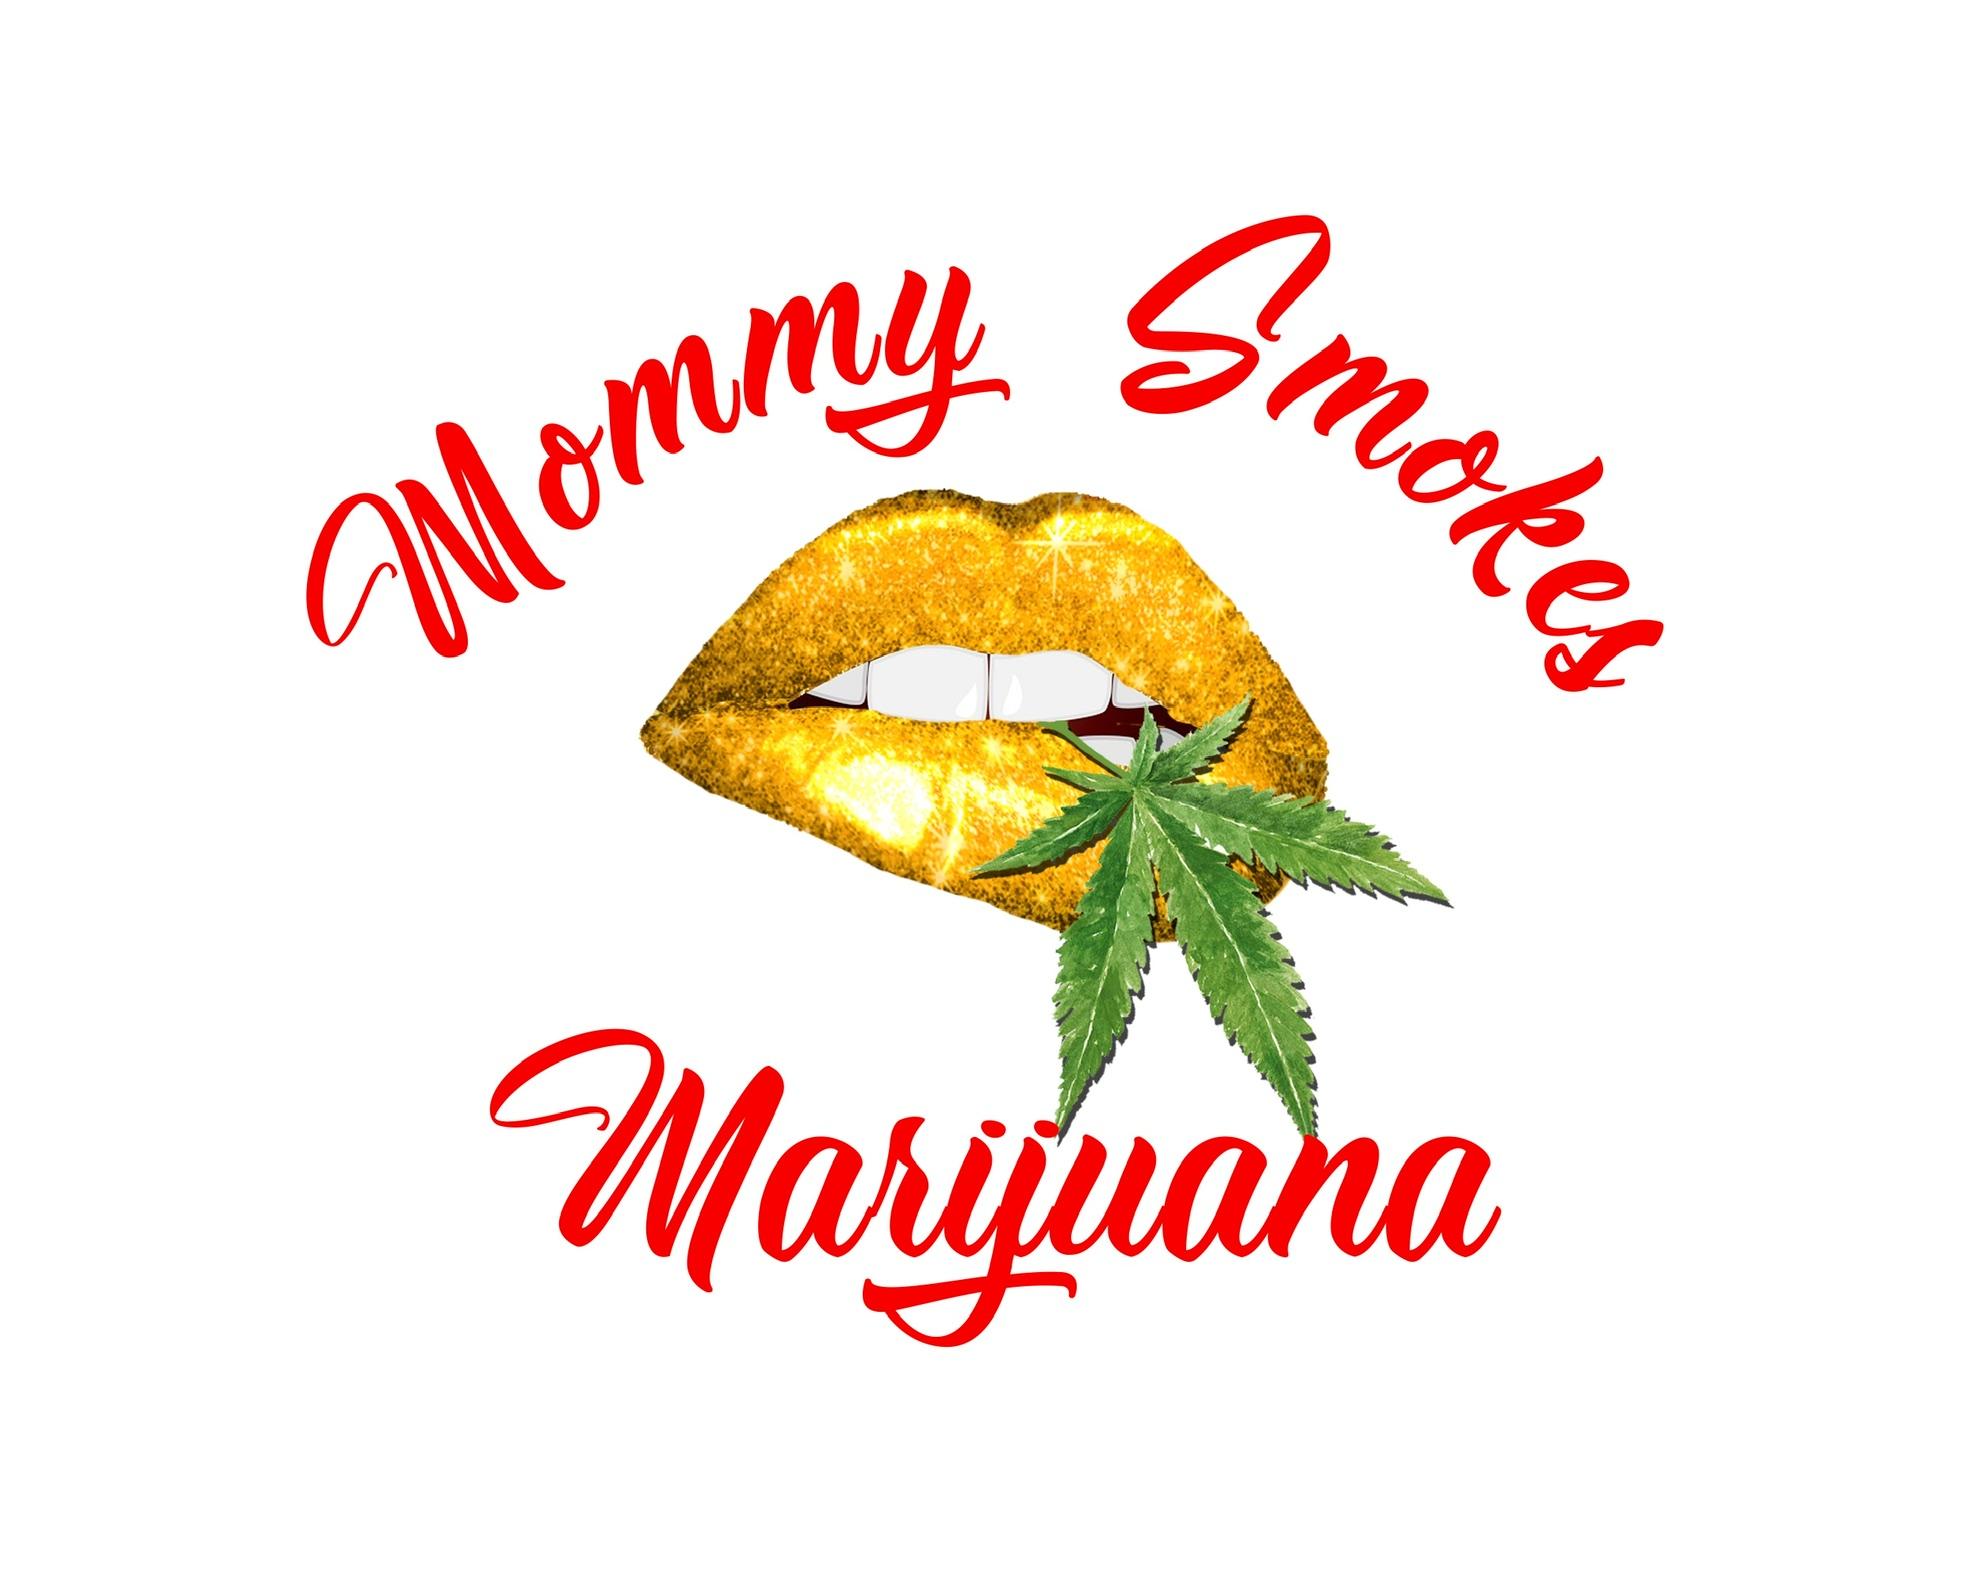 Mommy Smokes Marijuana Presents: Woman and wellness a “Self Healing” brunch